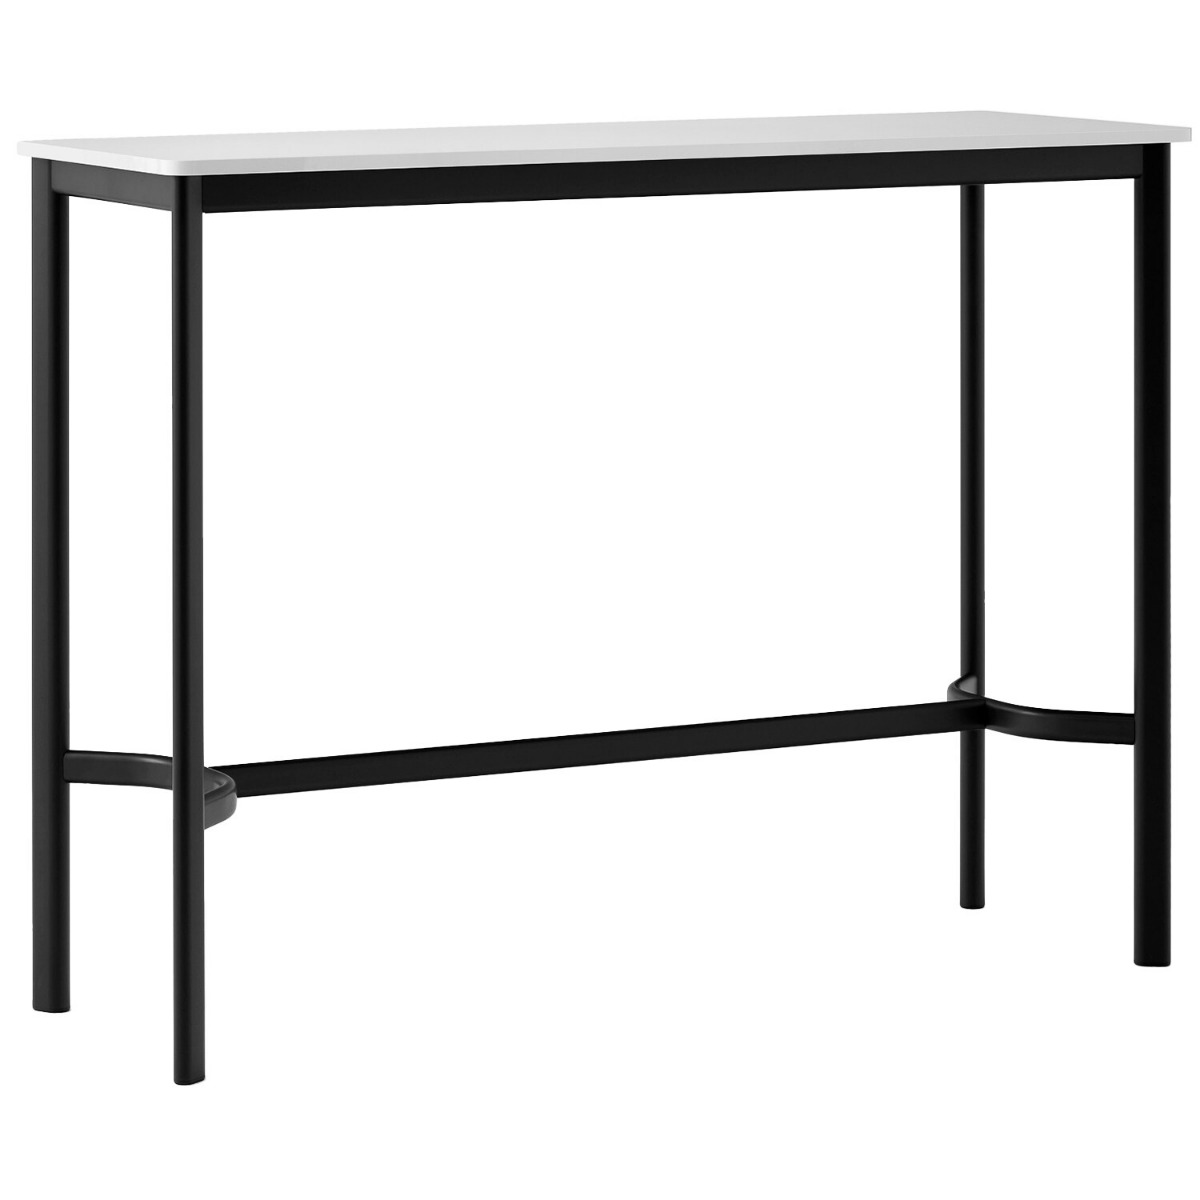 https://www.fundesign.nl/media/catalog/product/t/r/tradition-drip-bar-table-hw113-140x50x105-black-nano-laminate-black-legs-5.jpg